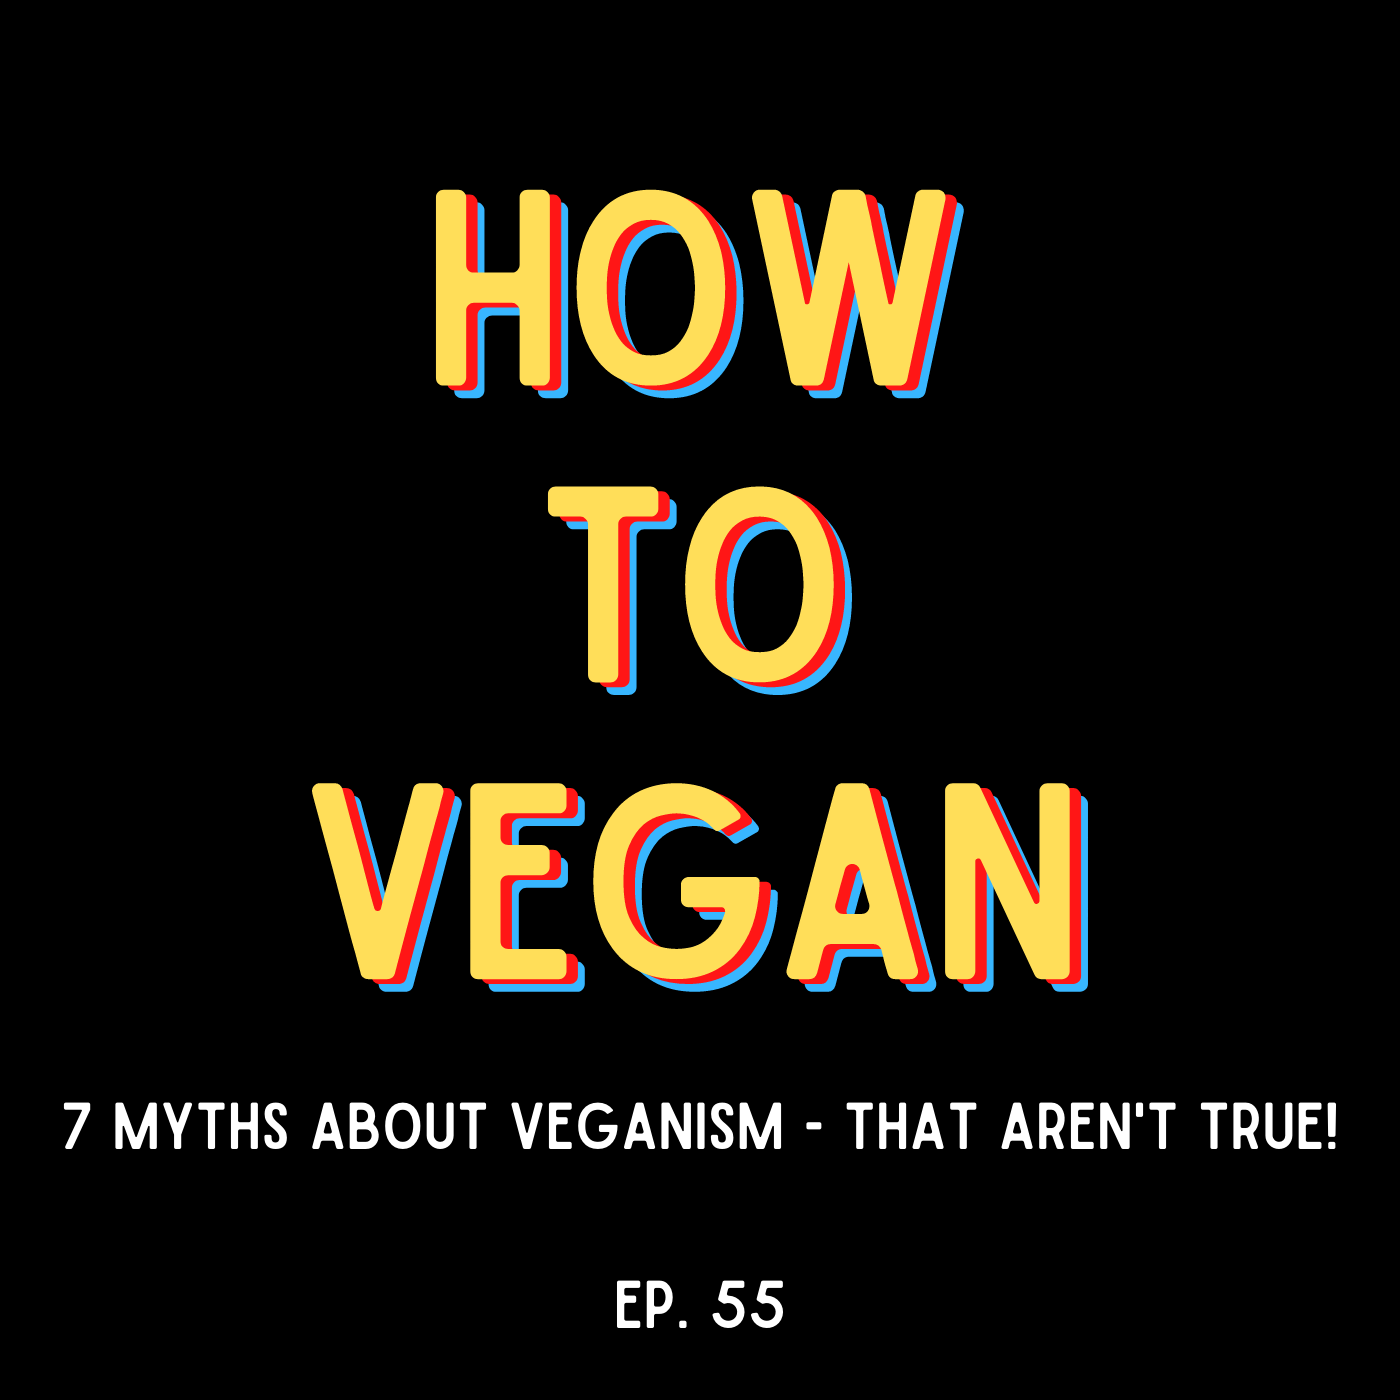 7 Myths About Veganism - That Aren't True!